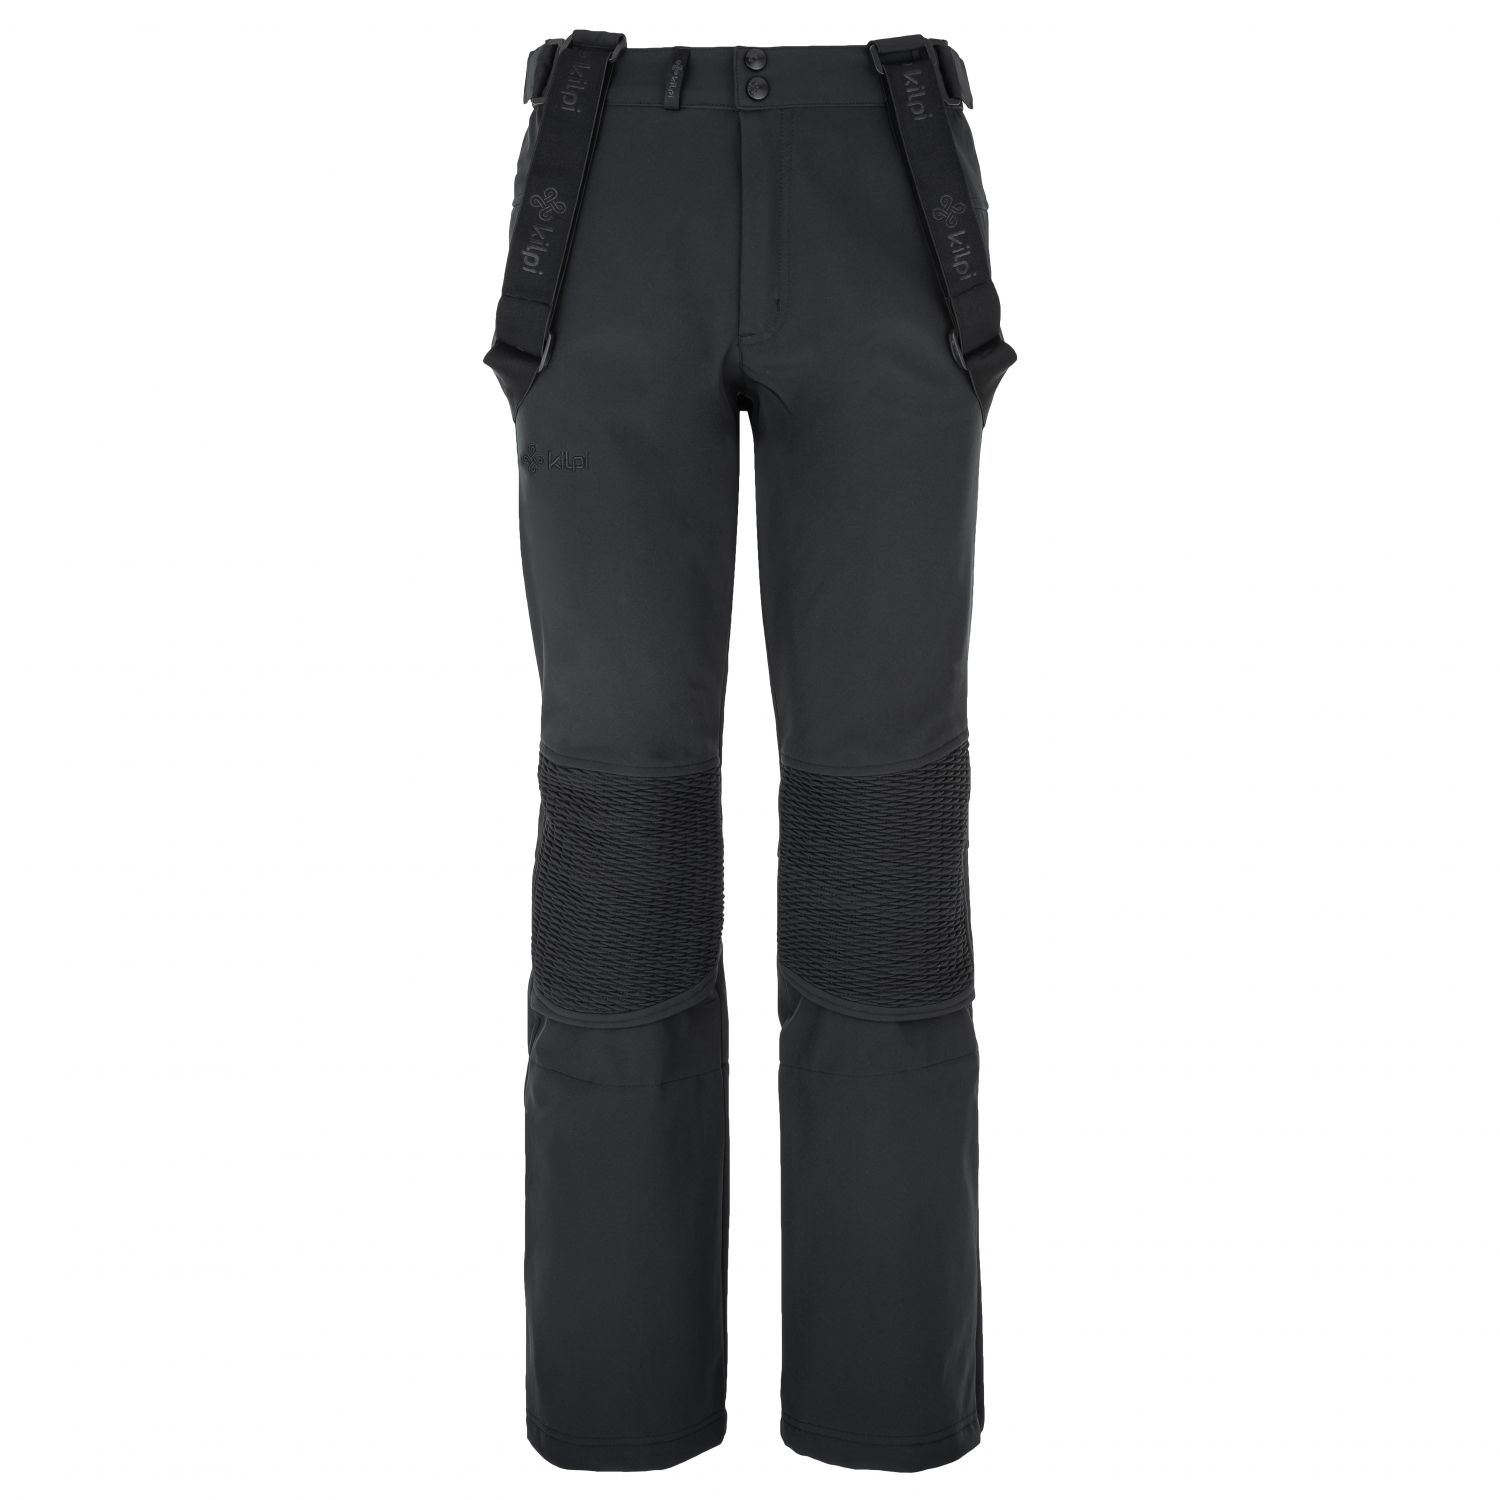 Kilpi Dione, softshell ski pants, women, black